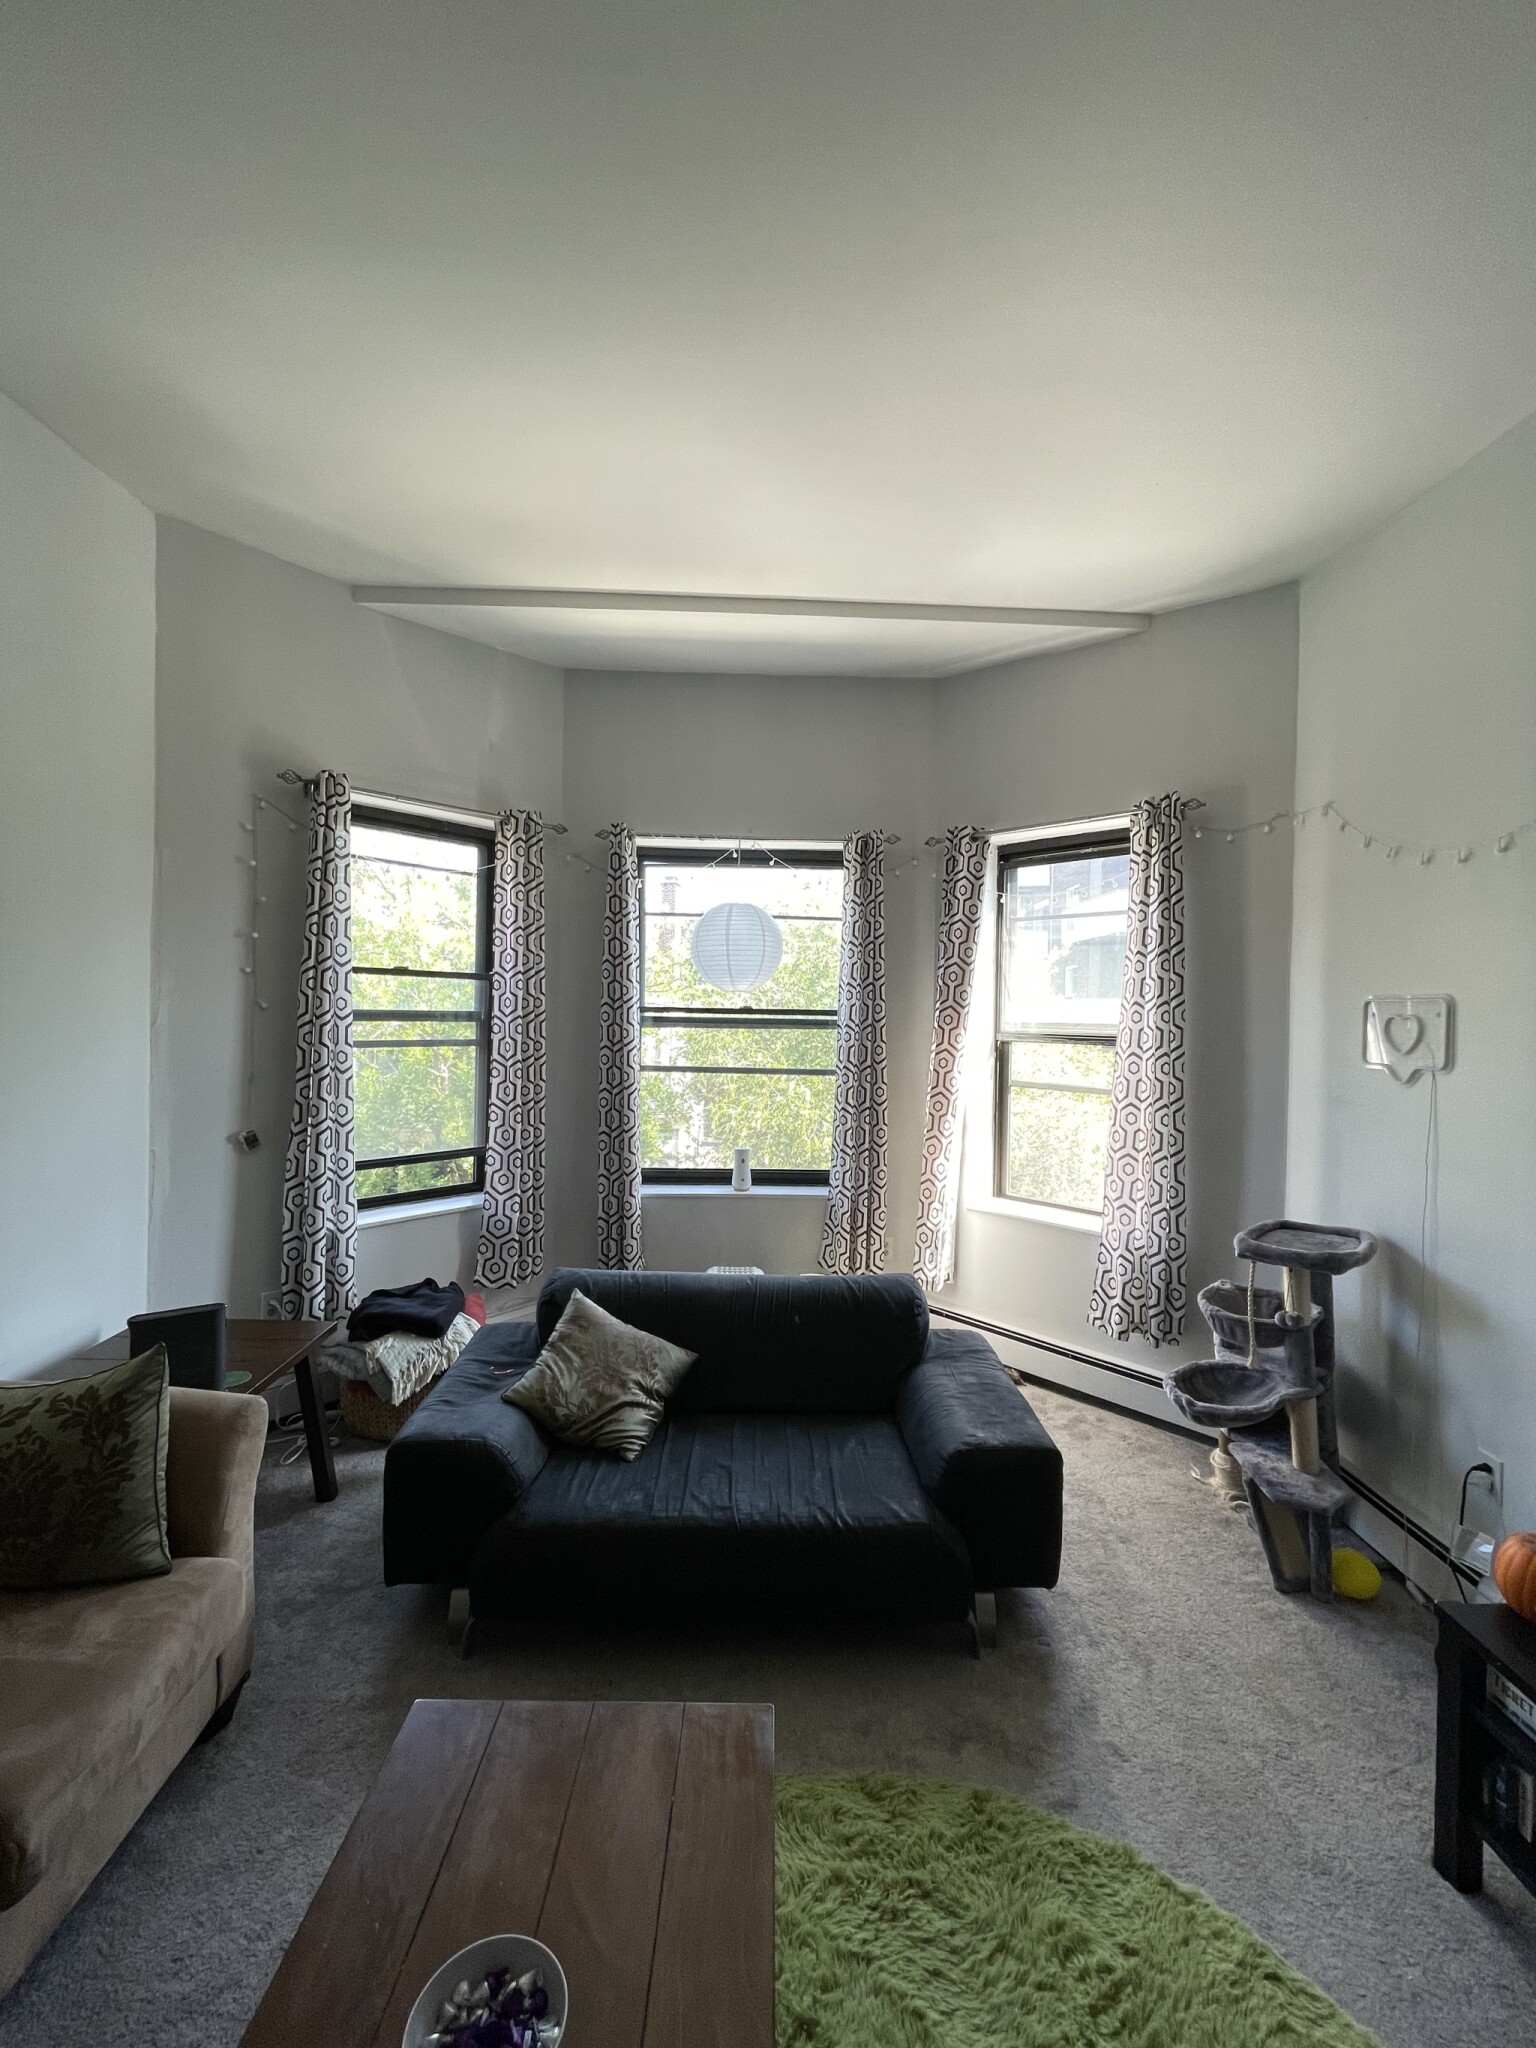 Photos of apartment on Park Vale,Brookline MA 02446